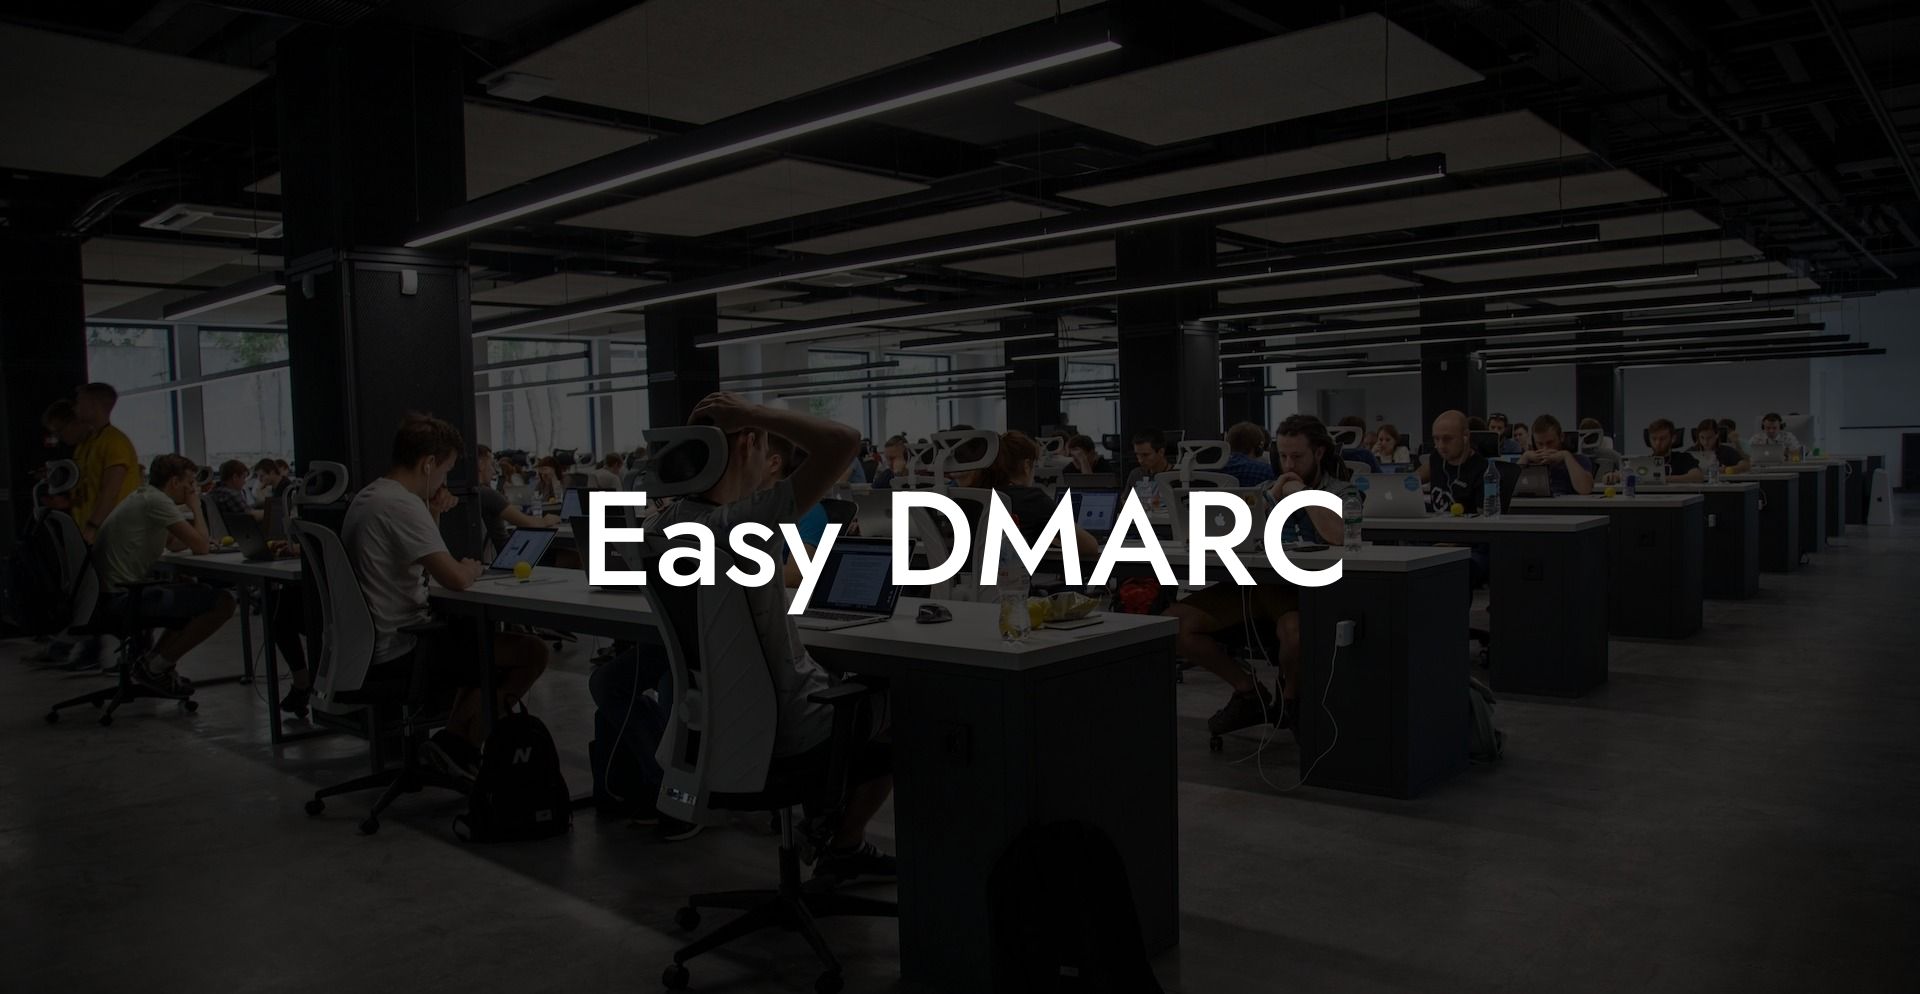 Easy DMARC